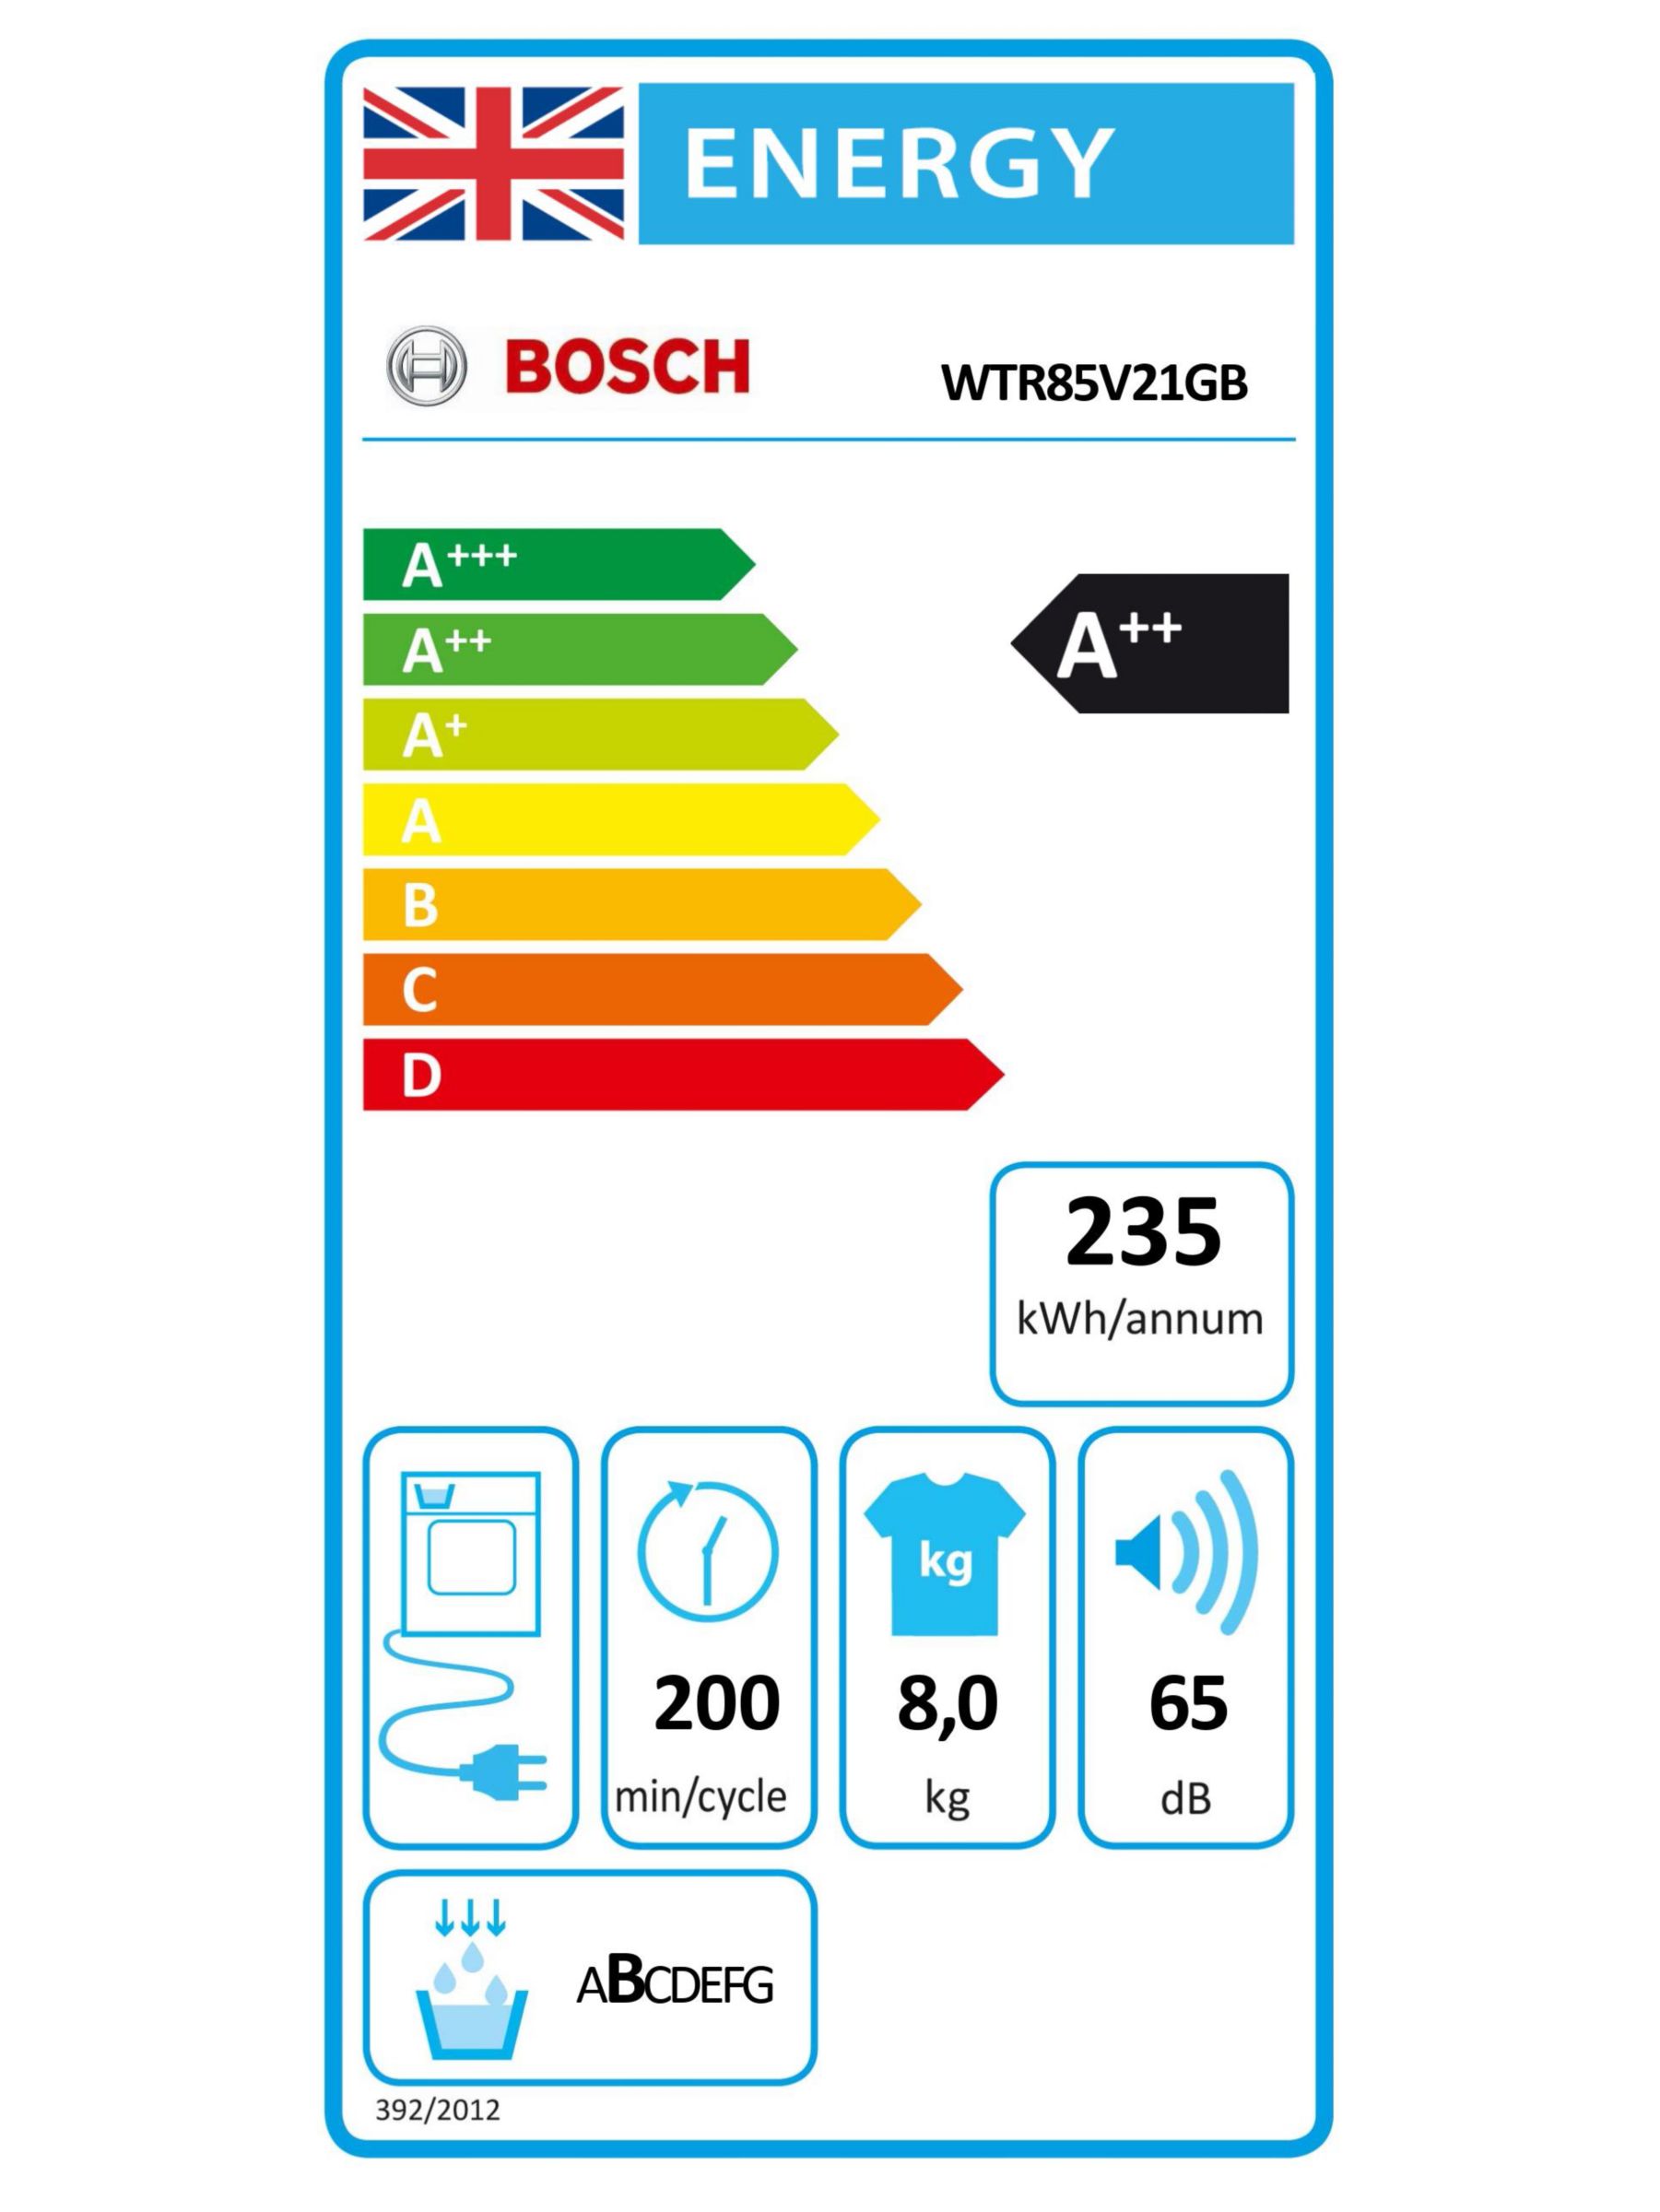 Bosch Wtr85v21gb Heat Pump Tumble Dryer 8kg A Energy Rating